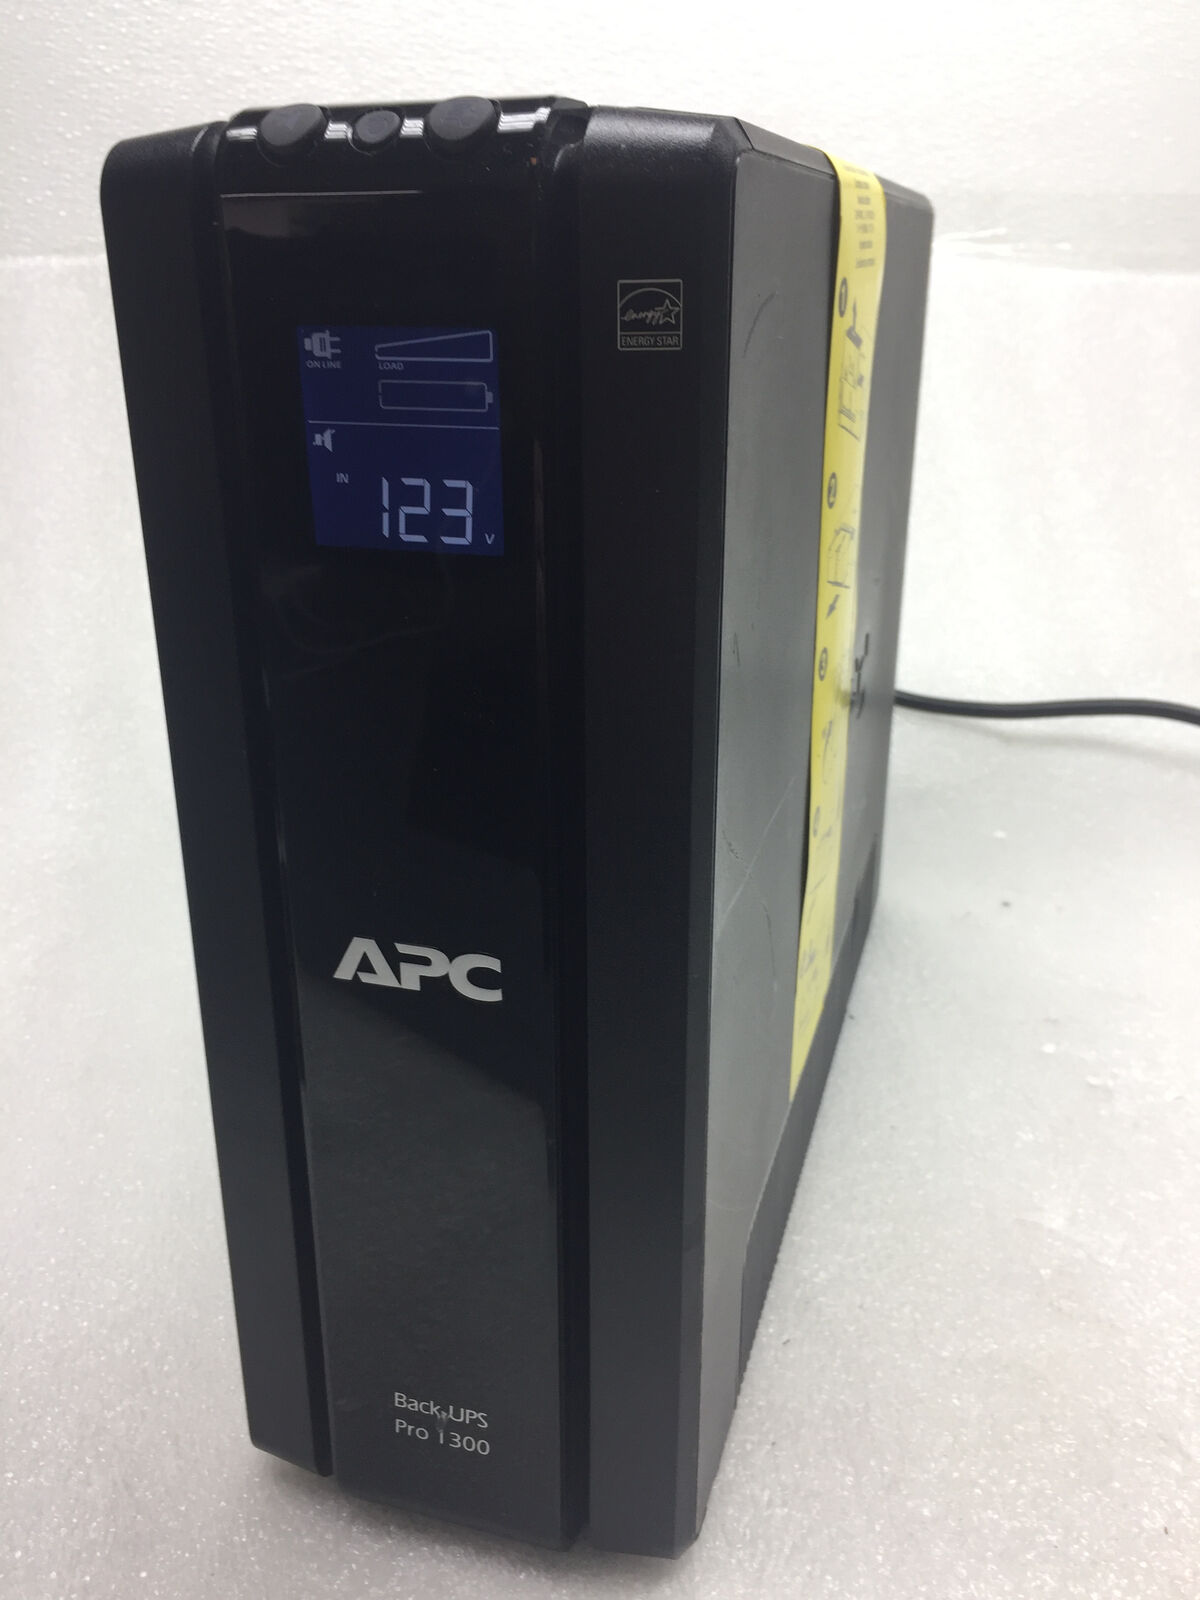 APC Back-UPS Pro 1300 Battery Backup 10-Outlet BR1300G No Battery Tested